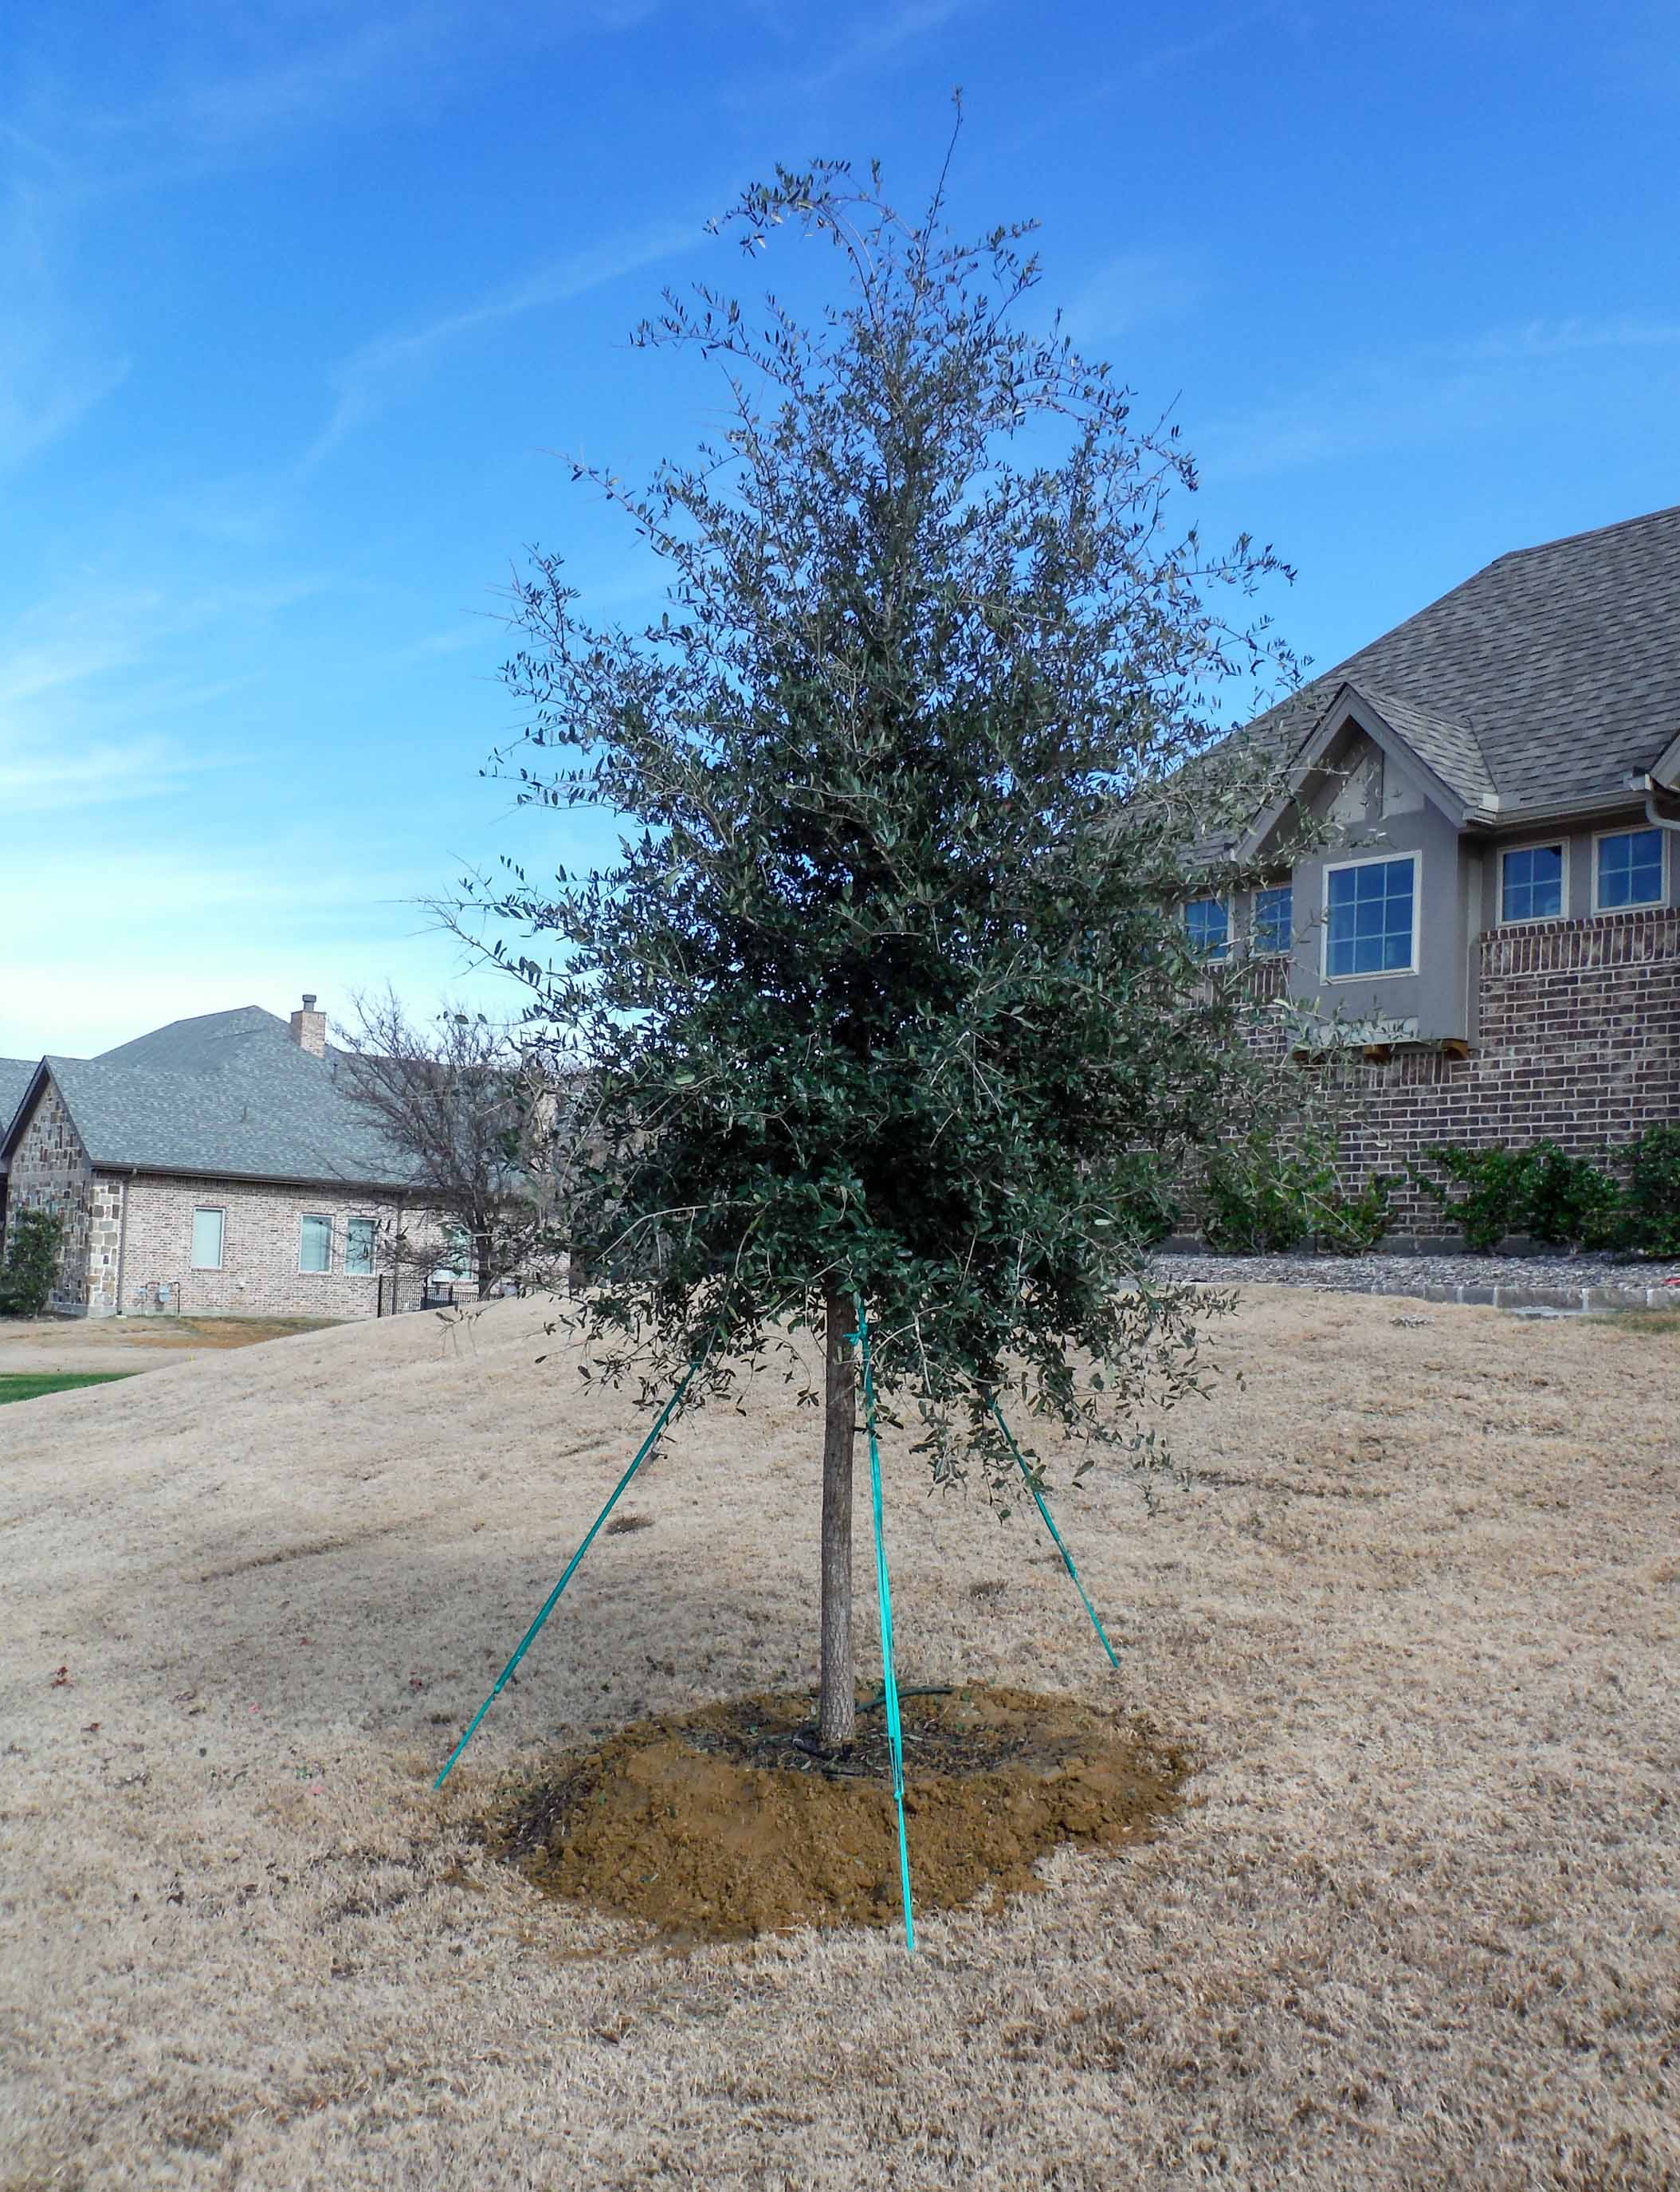 Live Oak tree installed by Treeland Nursery in North Texas.